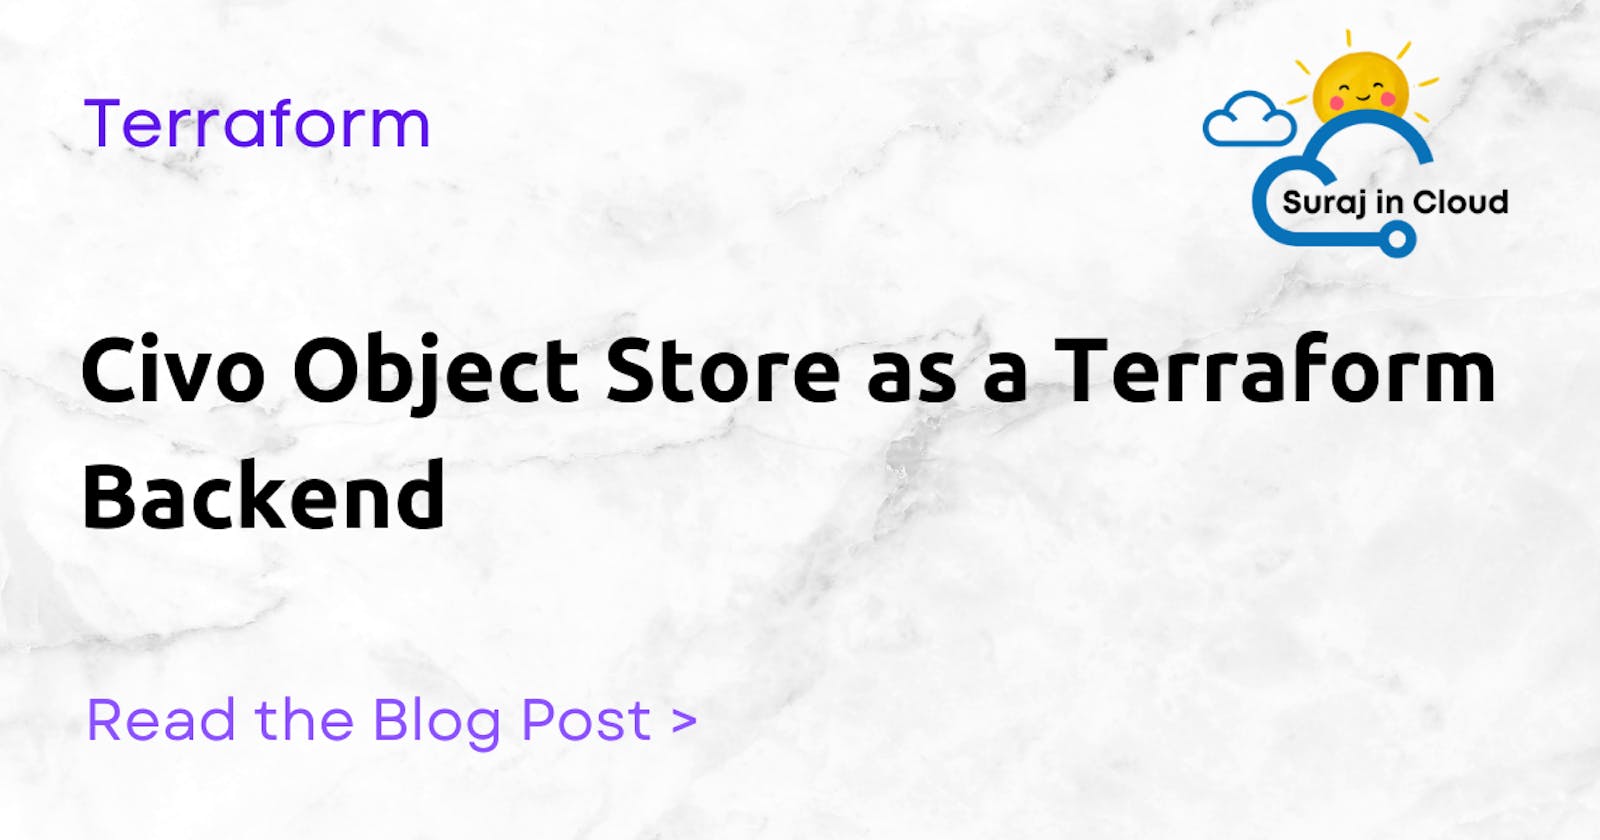 Civo Object Store as a Terraform Backend